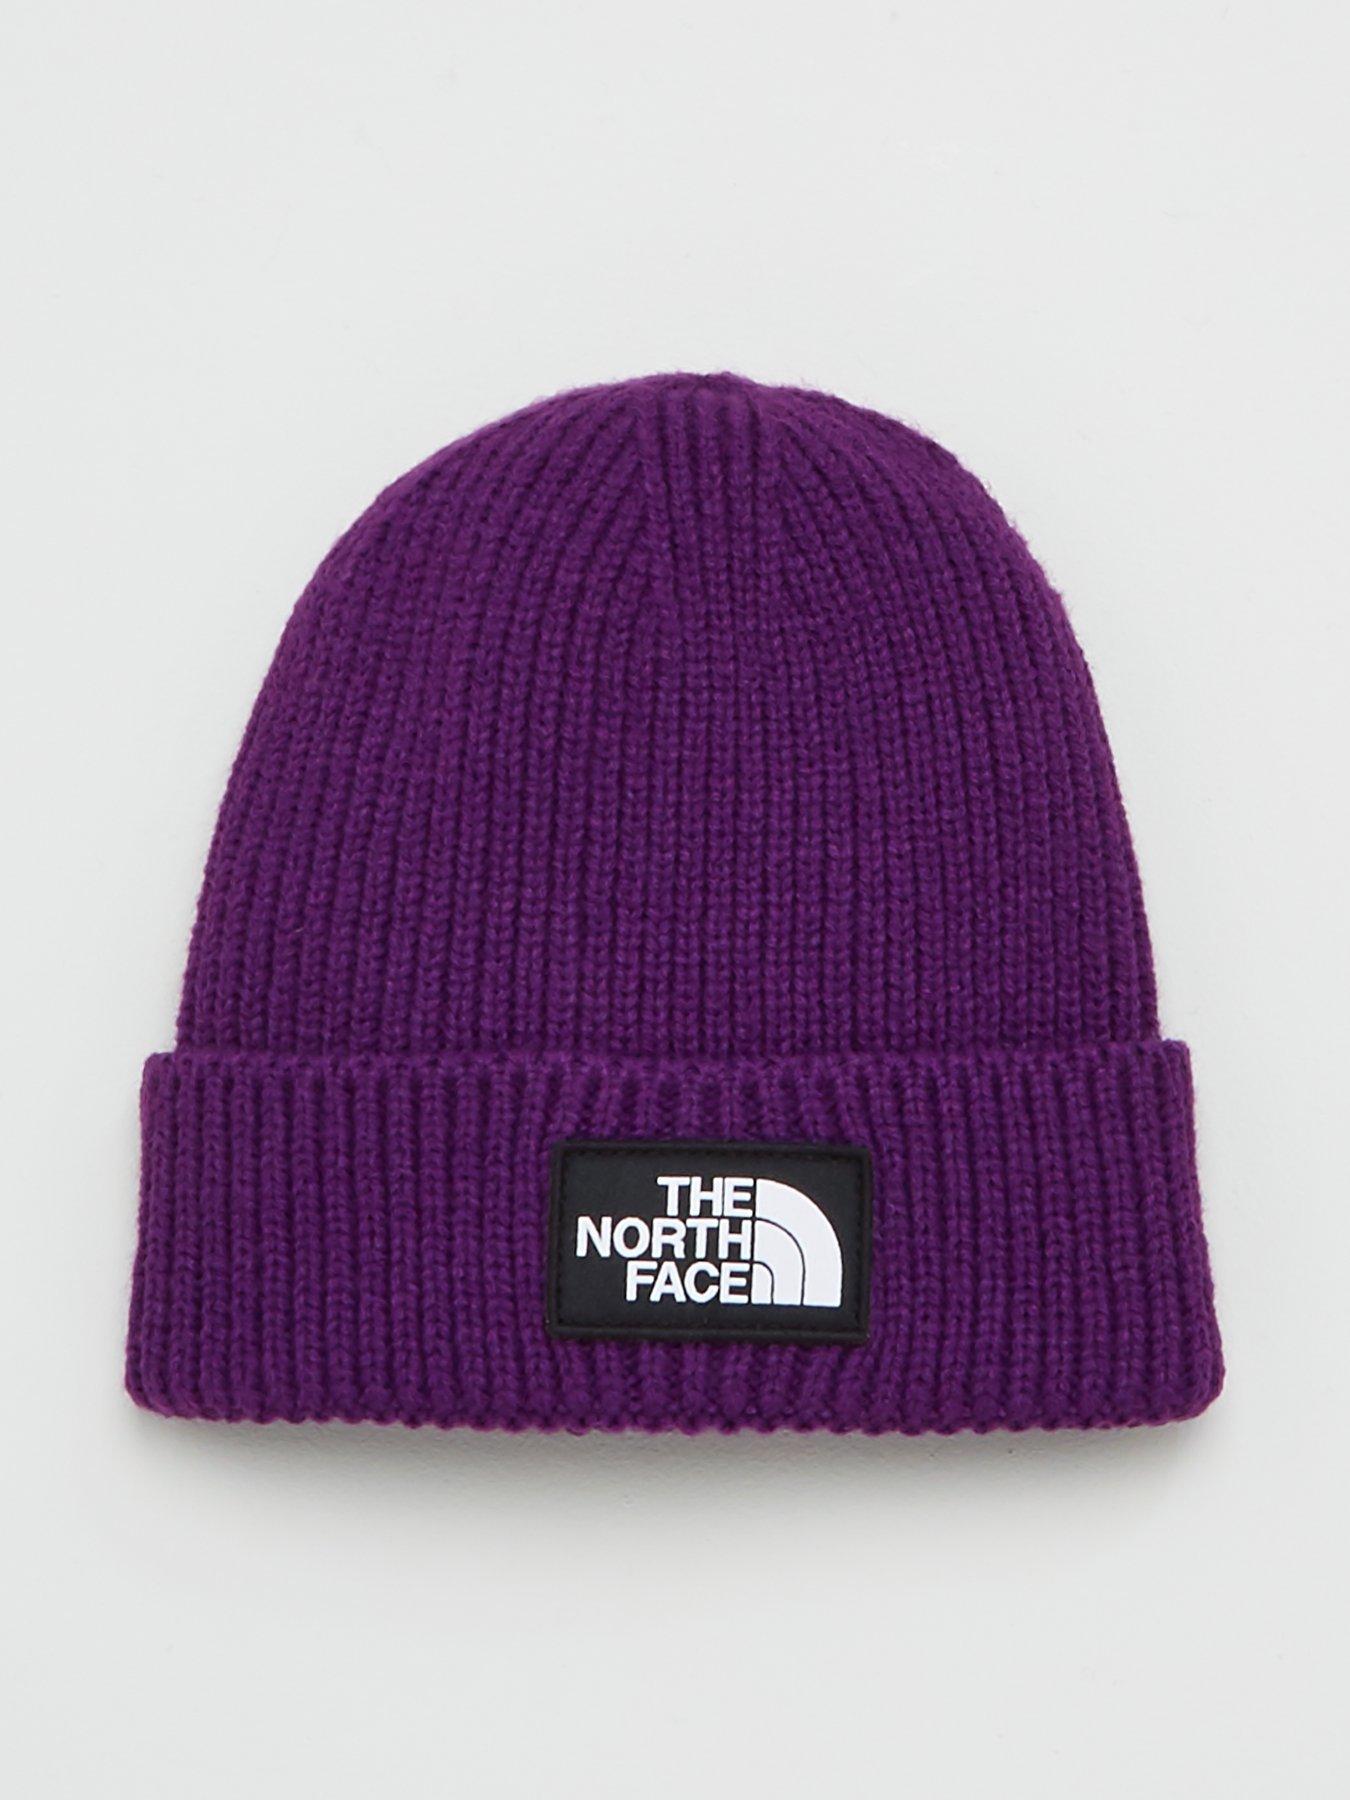 Personalized Mr Beast Logo Warm Winter Kids Hat Knit Beanie Cap for ...